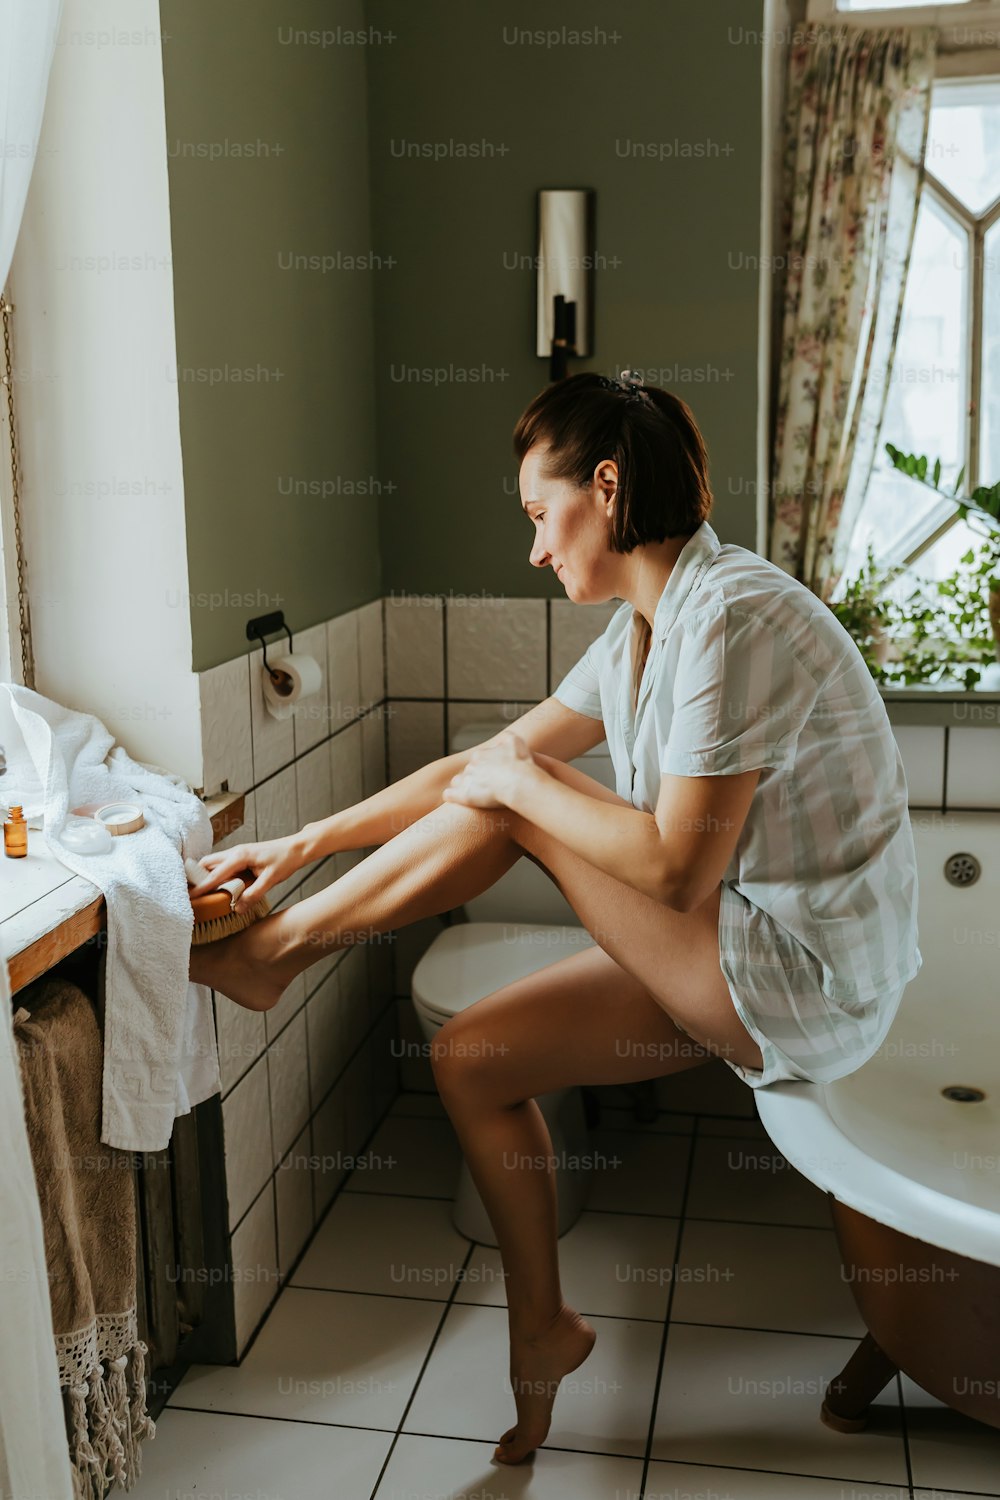 a woman sitting on a toilet in a bathroom